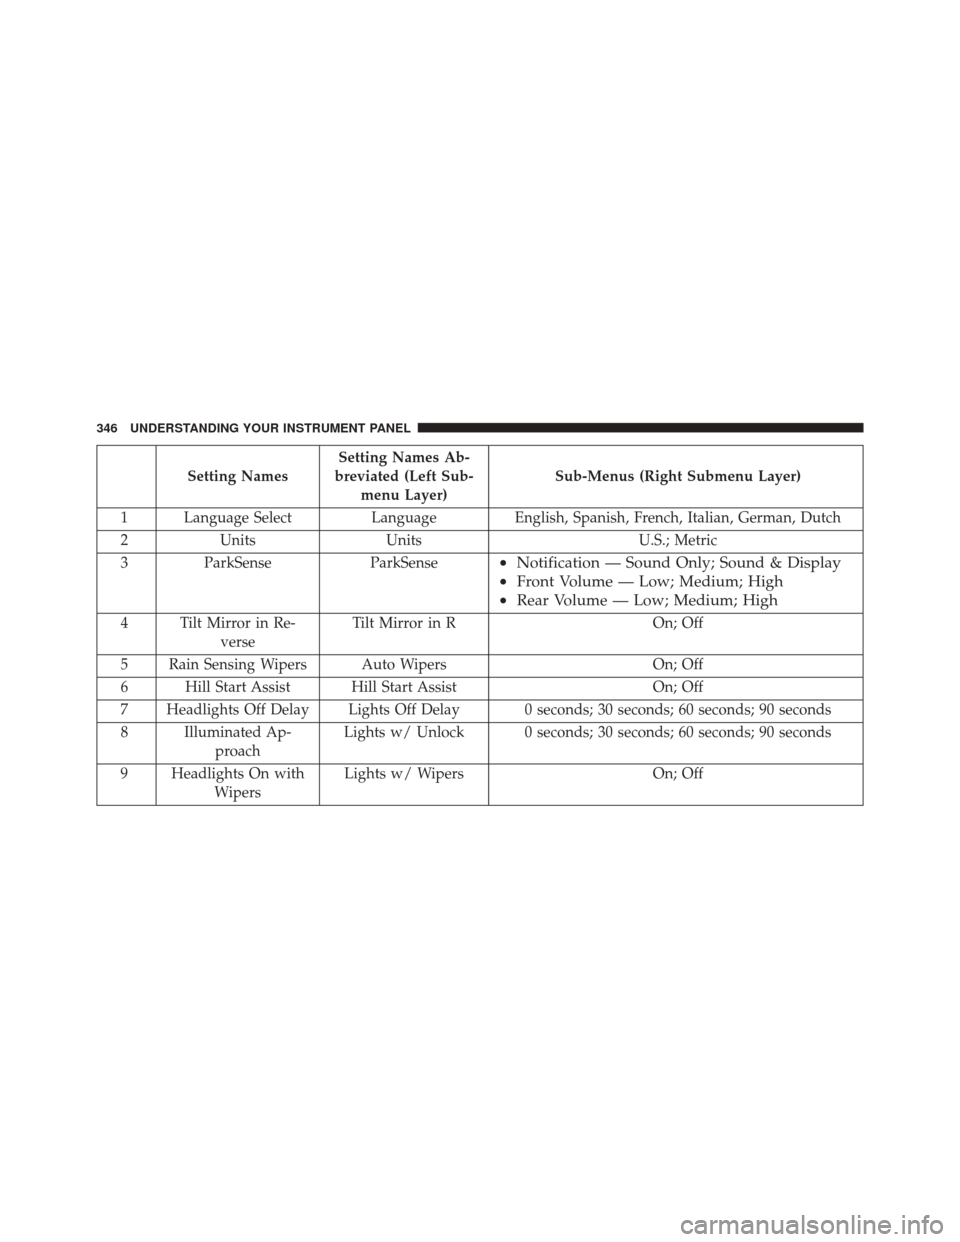 Ram 3500 2016  Owners Manual Setting NamesSetting Names Ab-
breviated (Left Sub- menu Layer) Sub-Menus (Right Submenu Layer)
1 Language Select Language English, Spanish, French, Italian, German, Dutch
2 Units Units U.S.; Metric
3